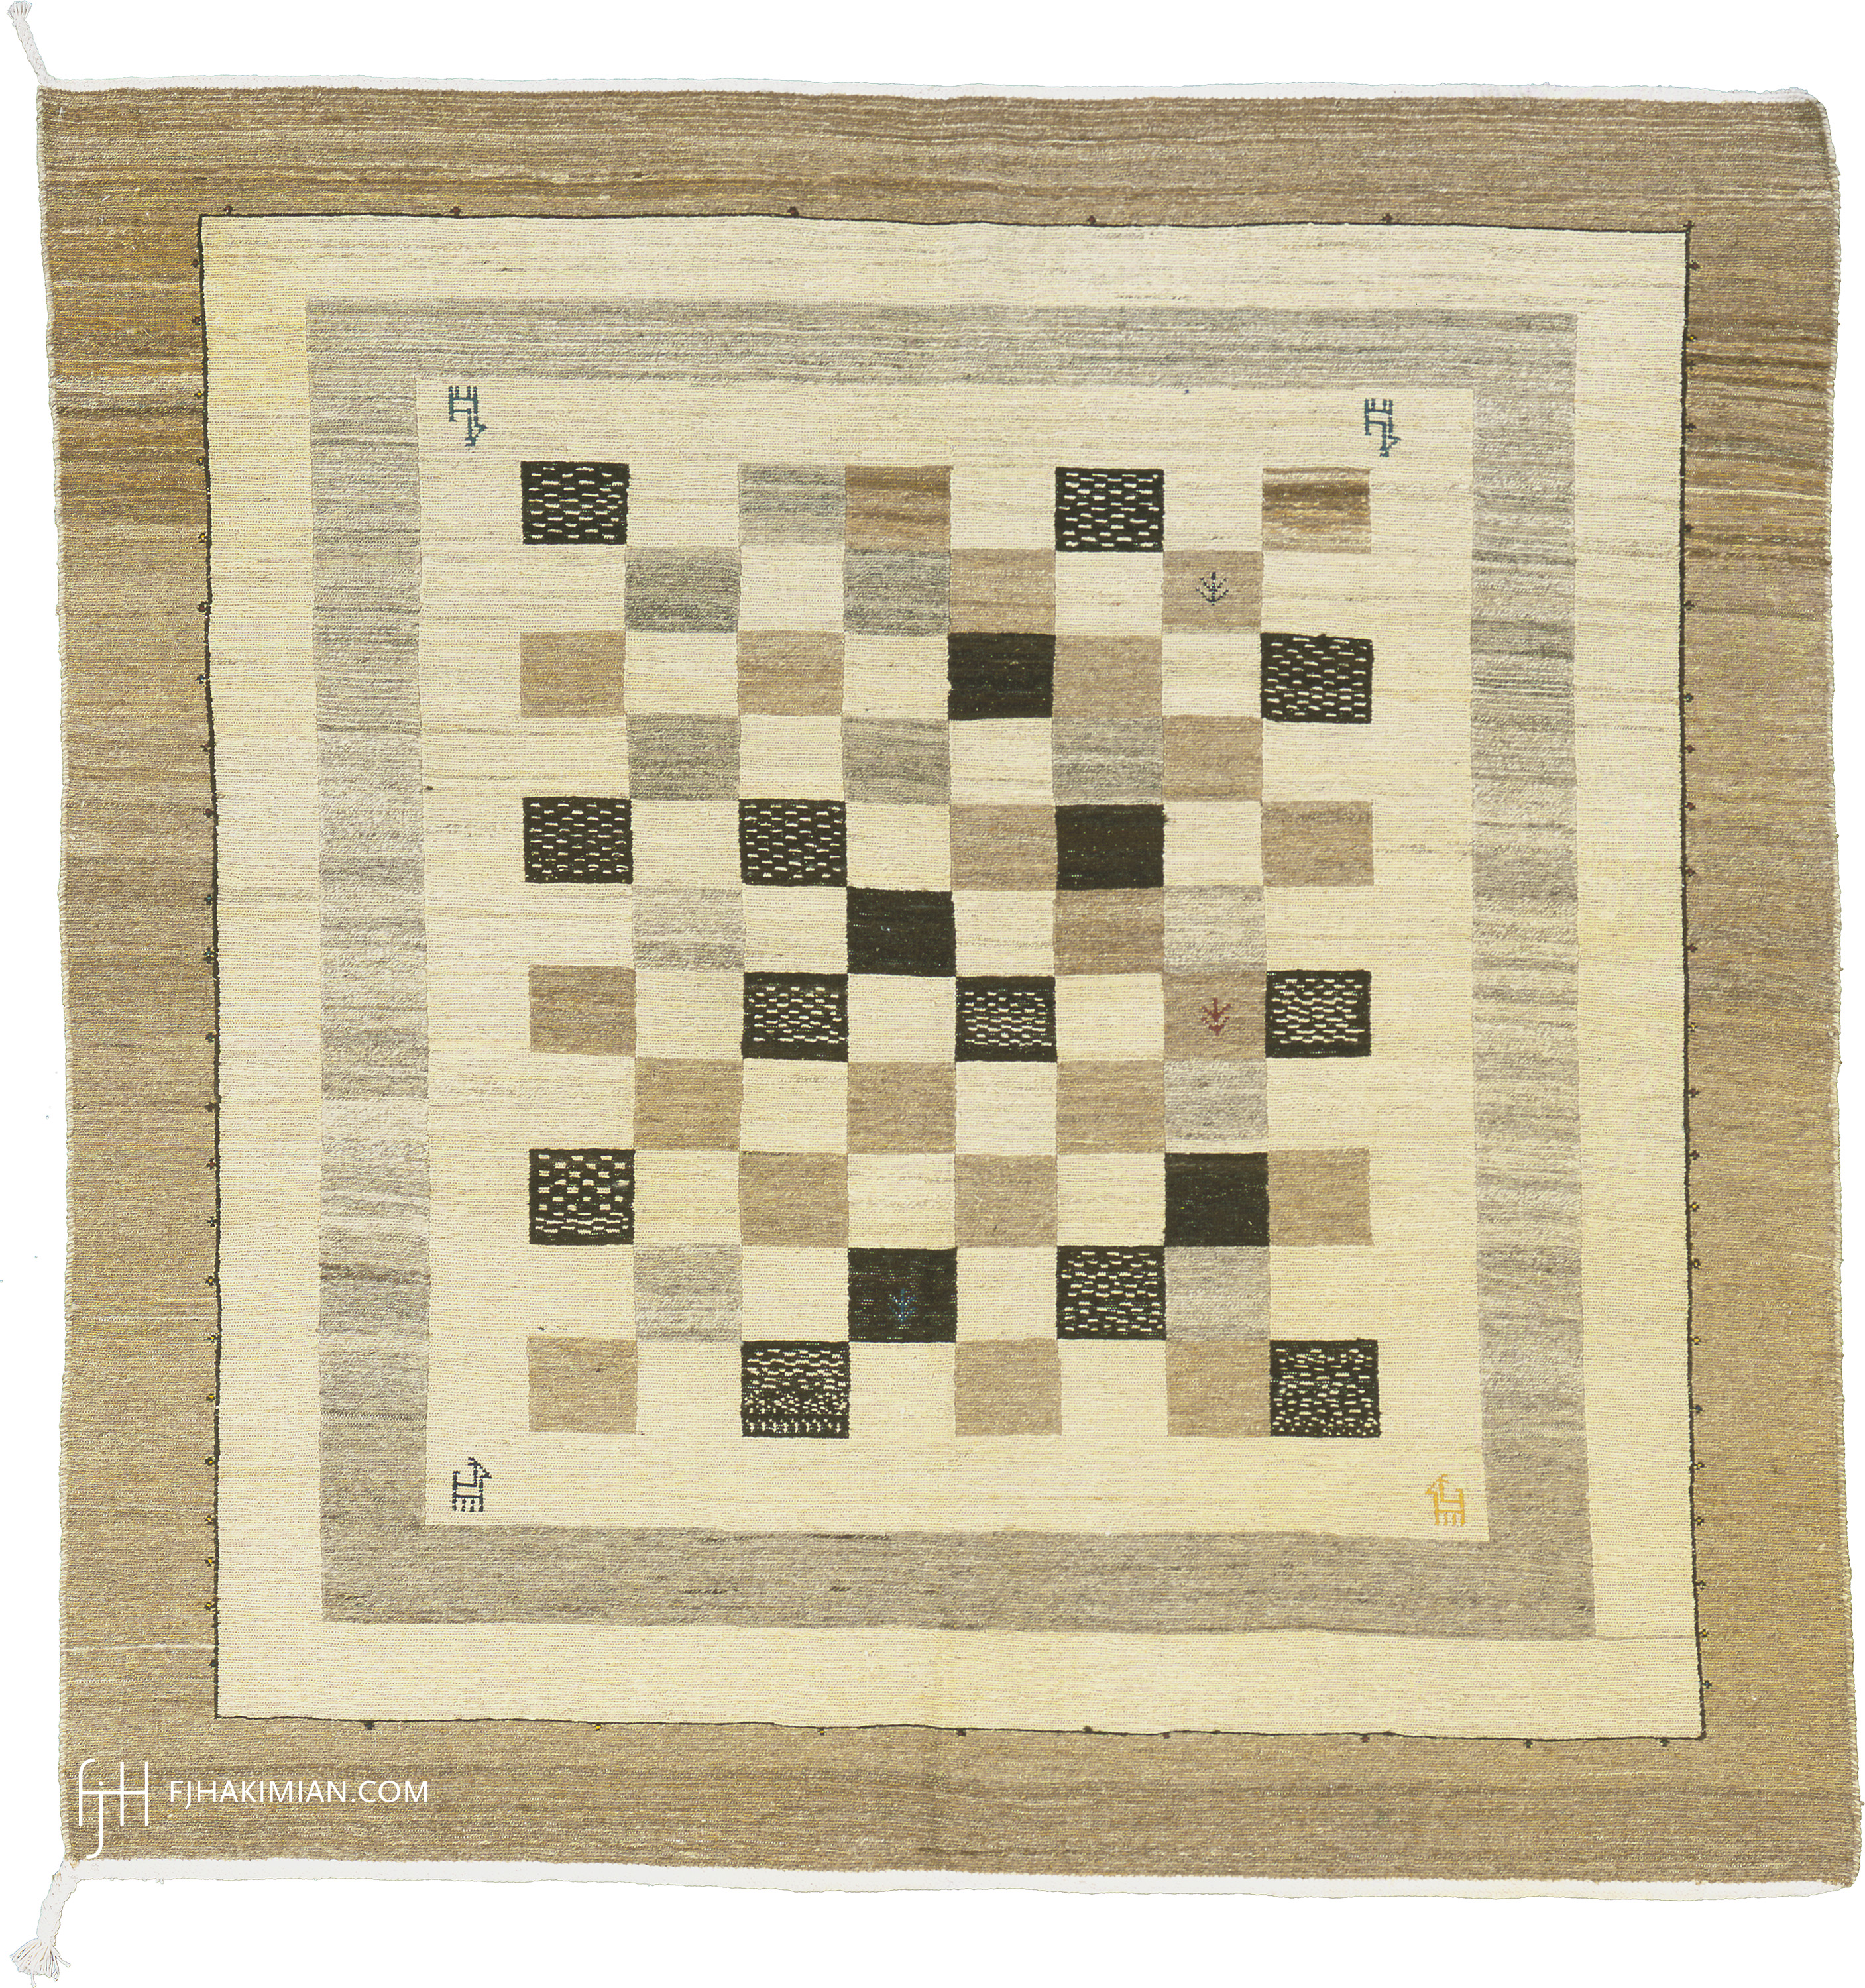 Soumak Design | Custom Soumak Undyed Wool Carpet | FJ Hakimian | Carpet Gallery in NY